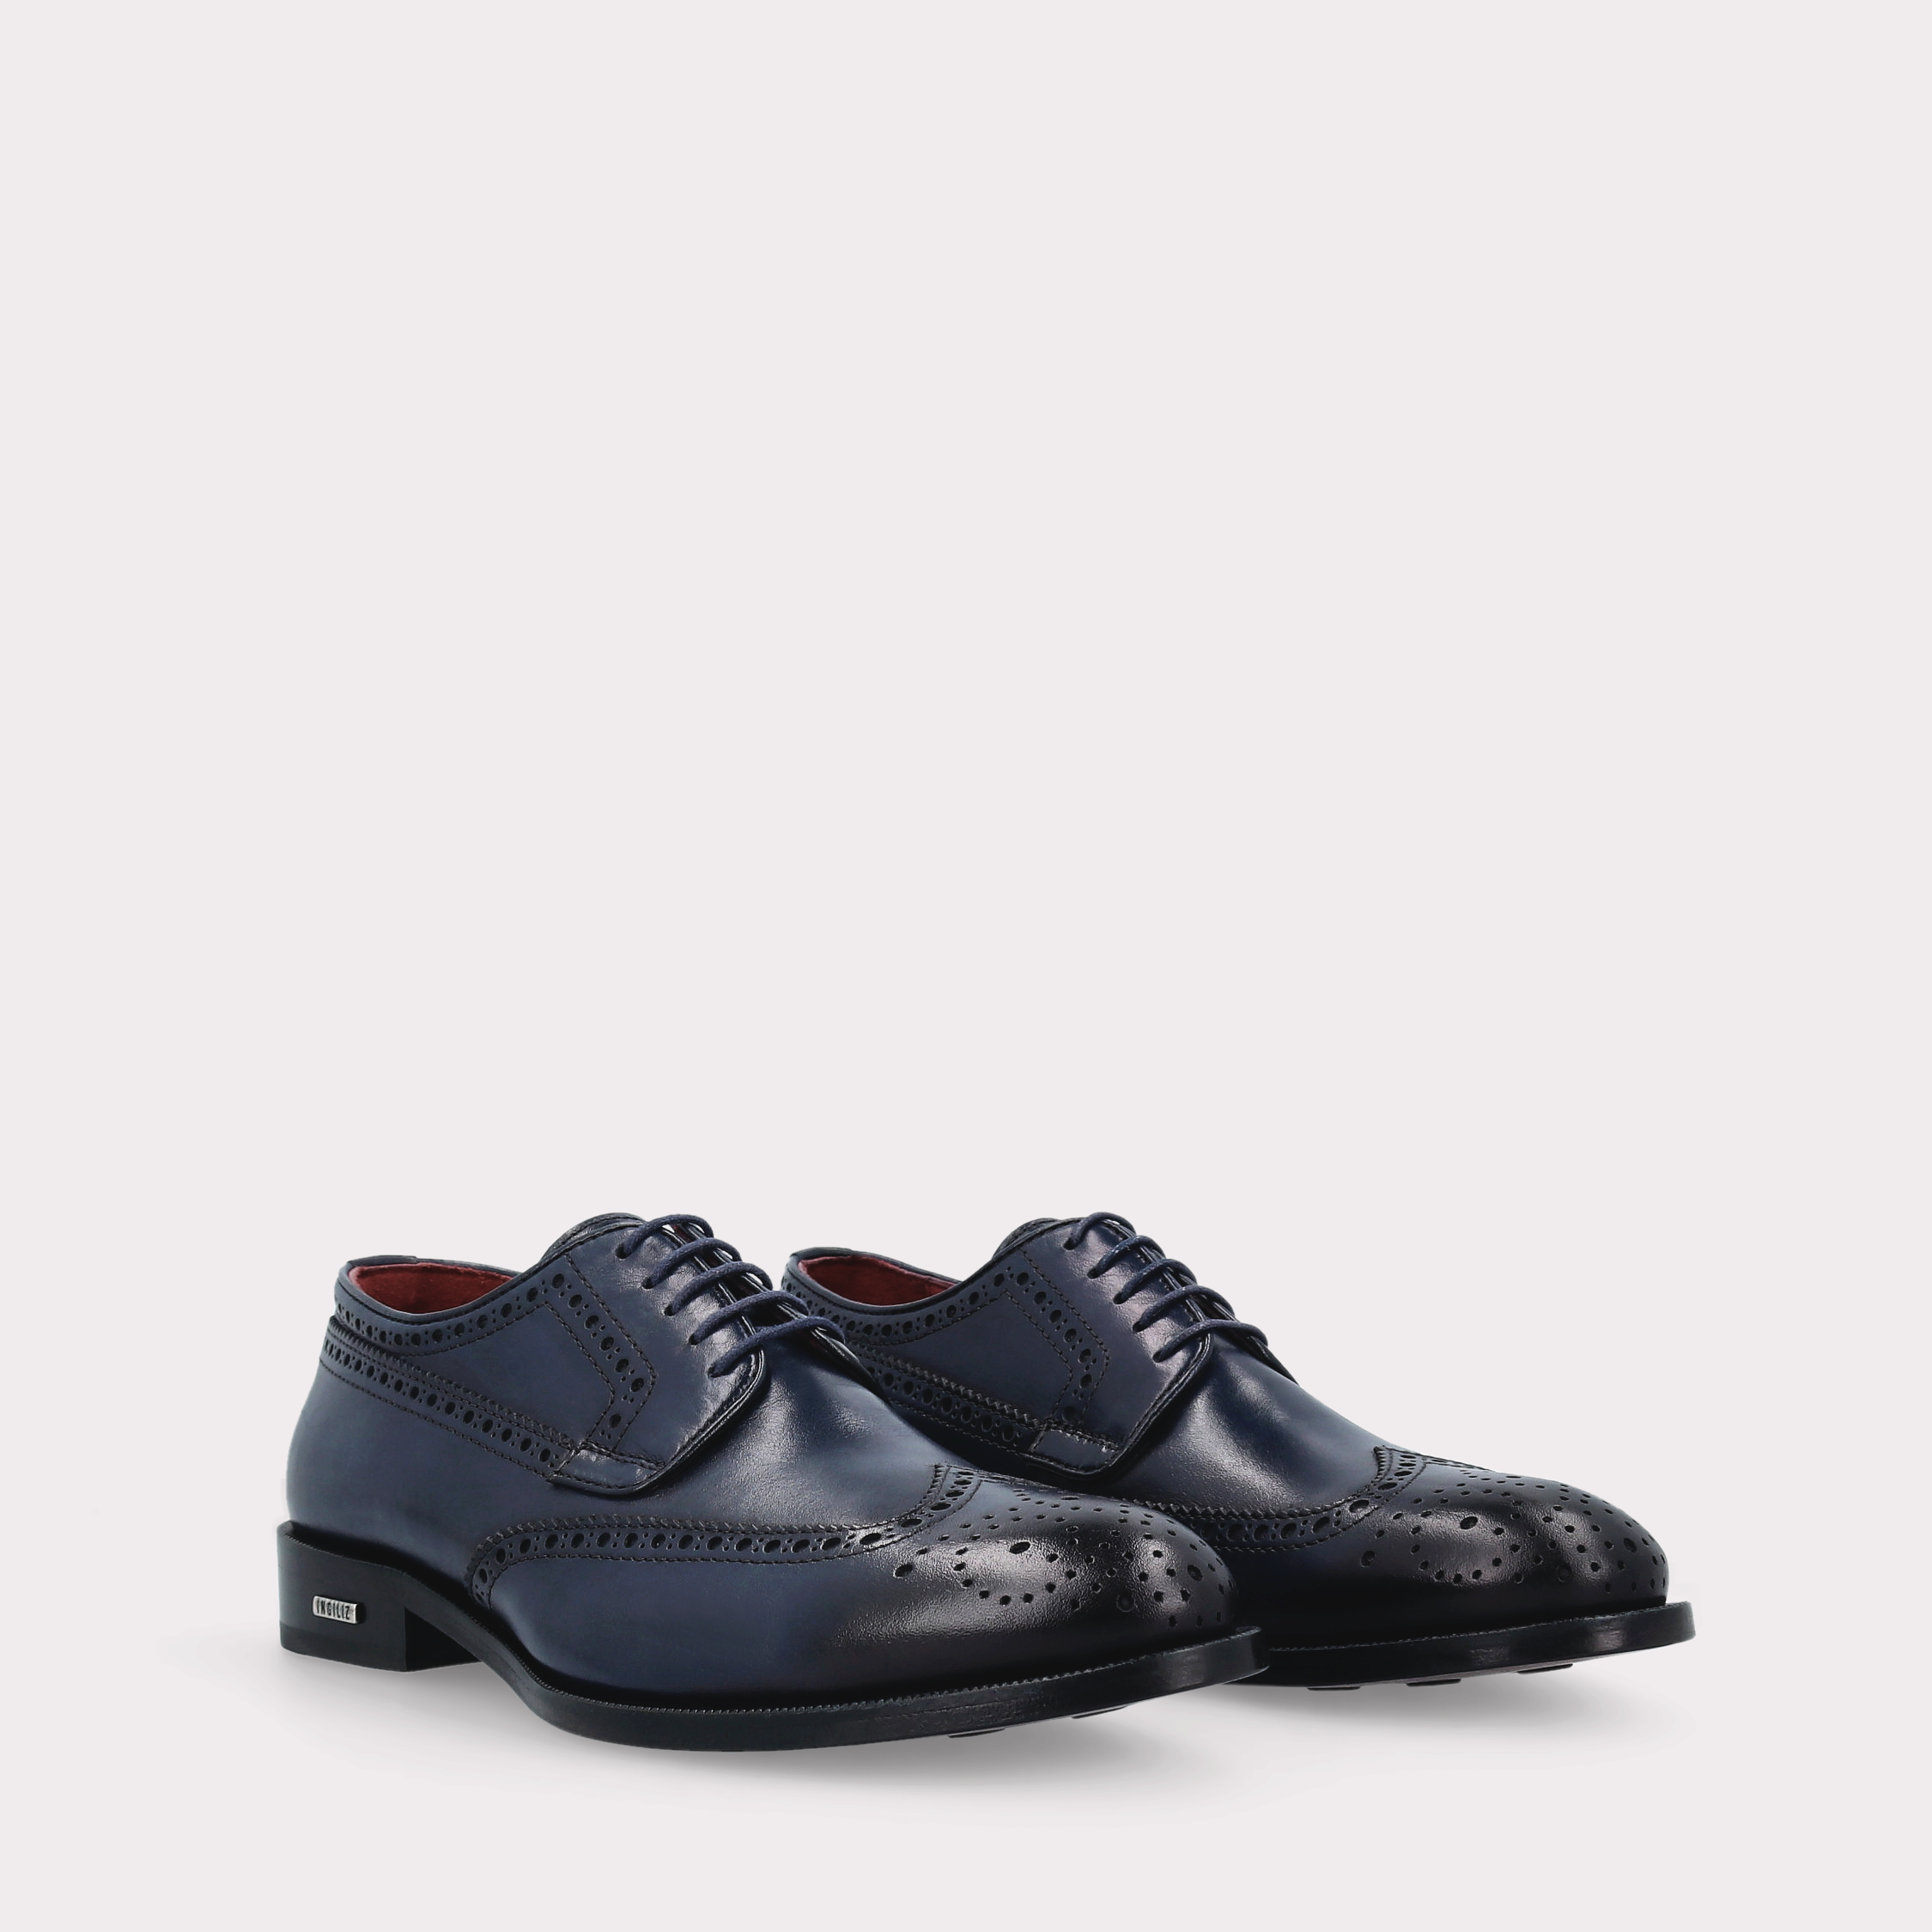 BERGAMO 01 dark blue leather derby shoes